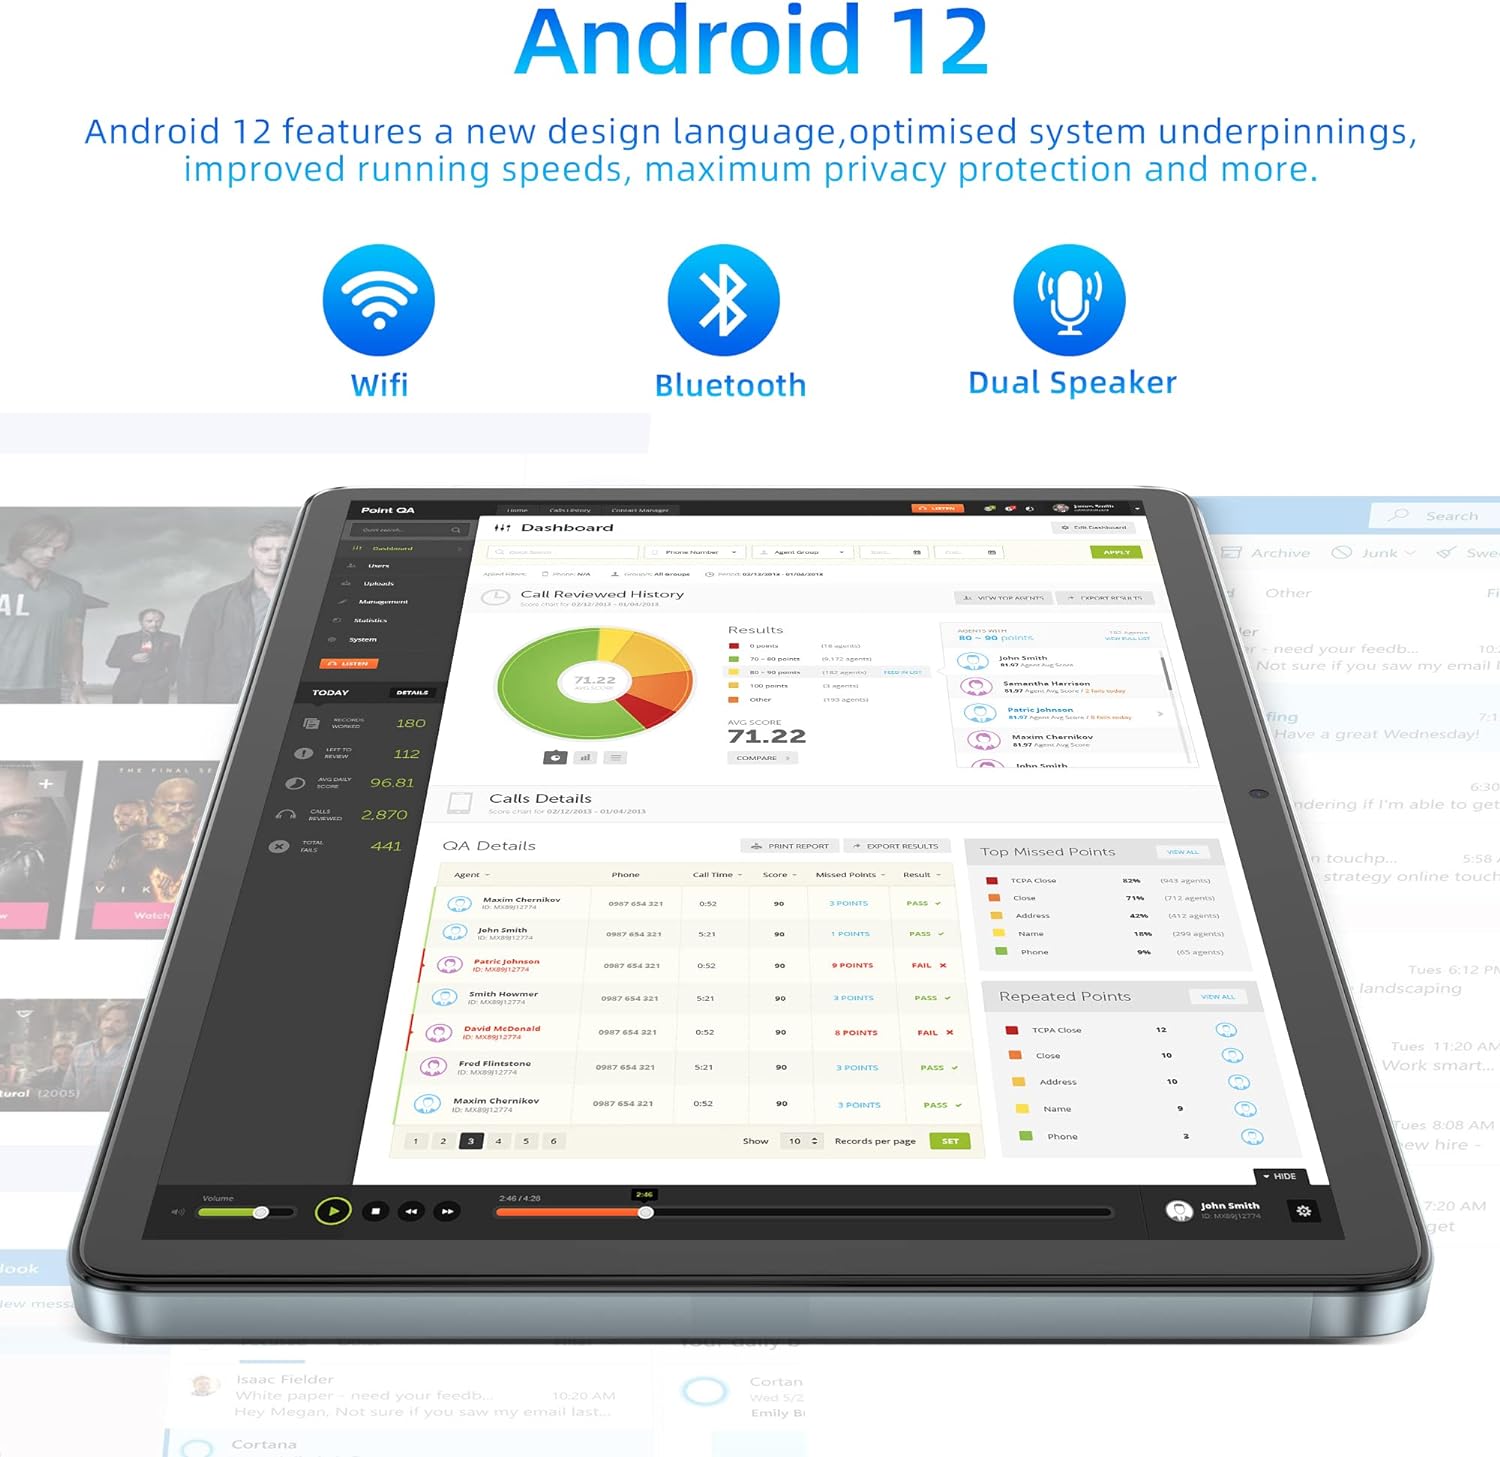 jumper Tablet, 10 Inch 8GB RAM 128GB Storage Android Tablets, Octa-Core Processor, FHD 1200x1920 Pixels Display, 5MP+13MP Camera, 5G WiFi, Bluetooth 5.0, USB Type-C, 6000mAh Battery, GPS.